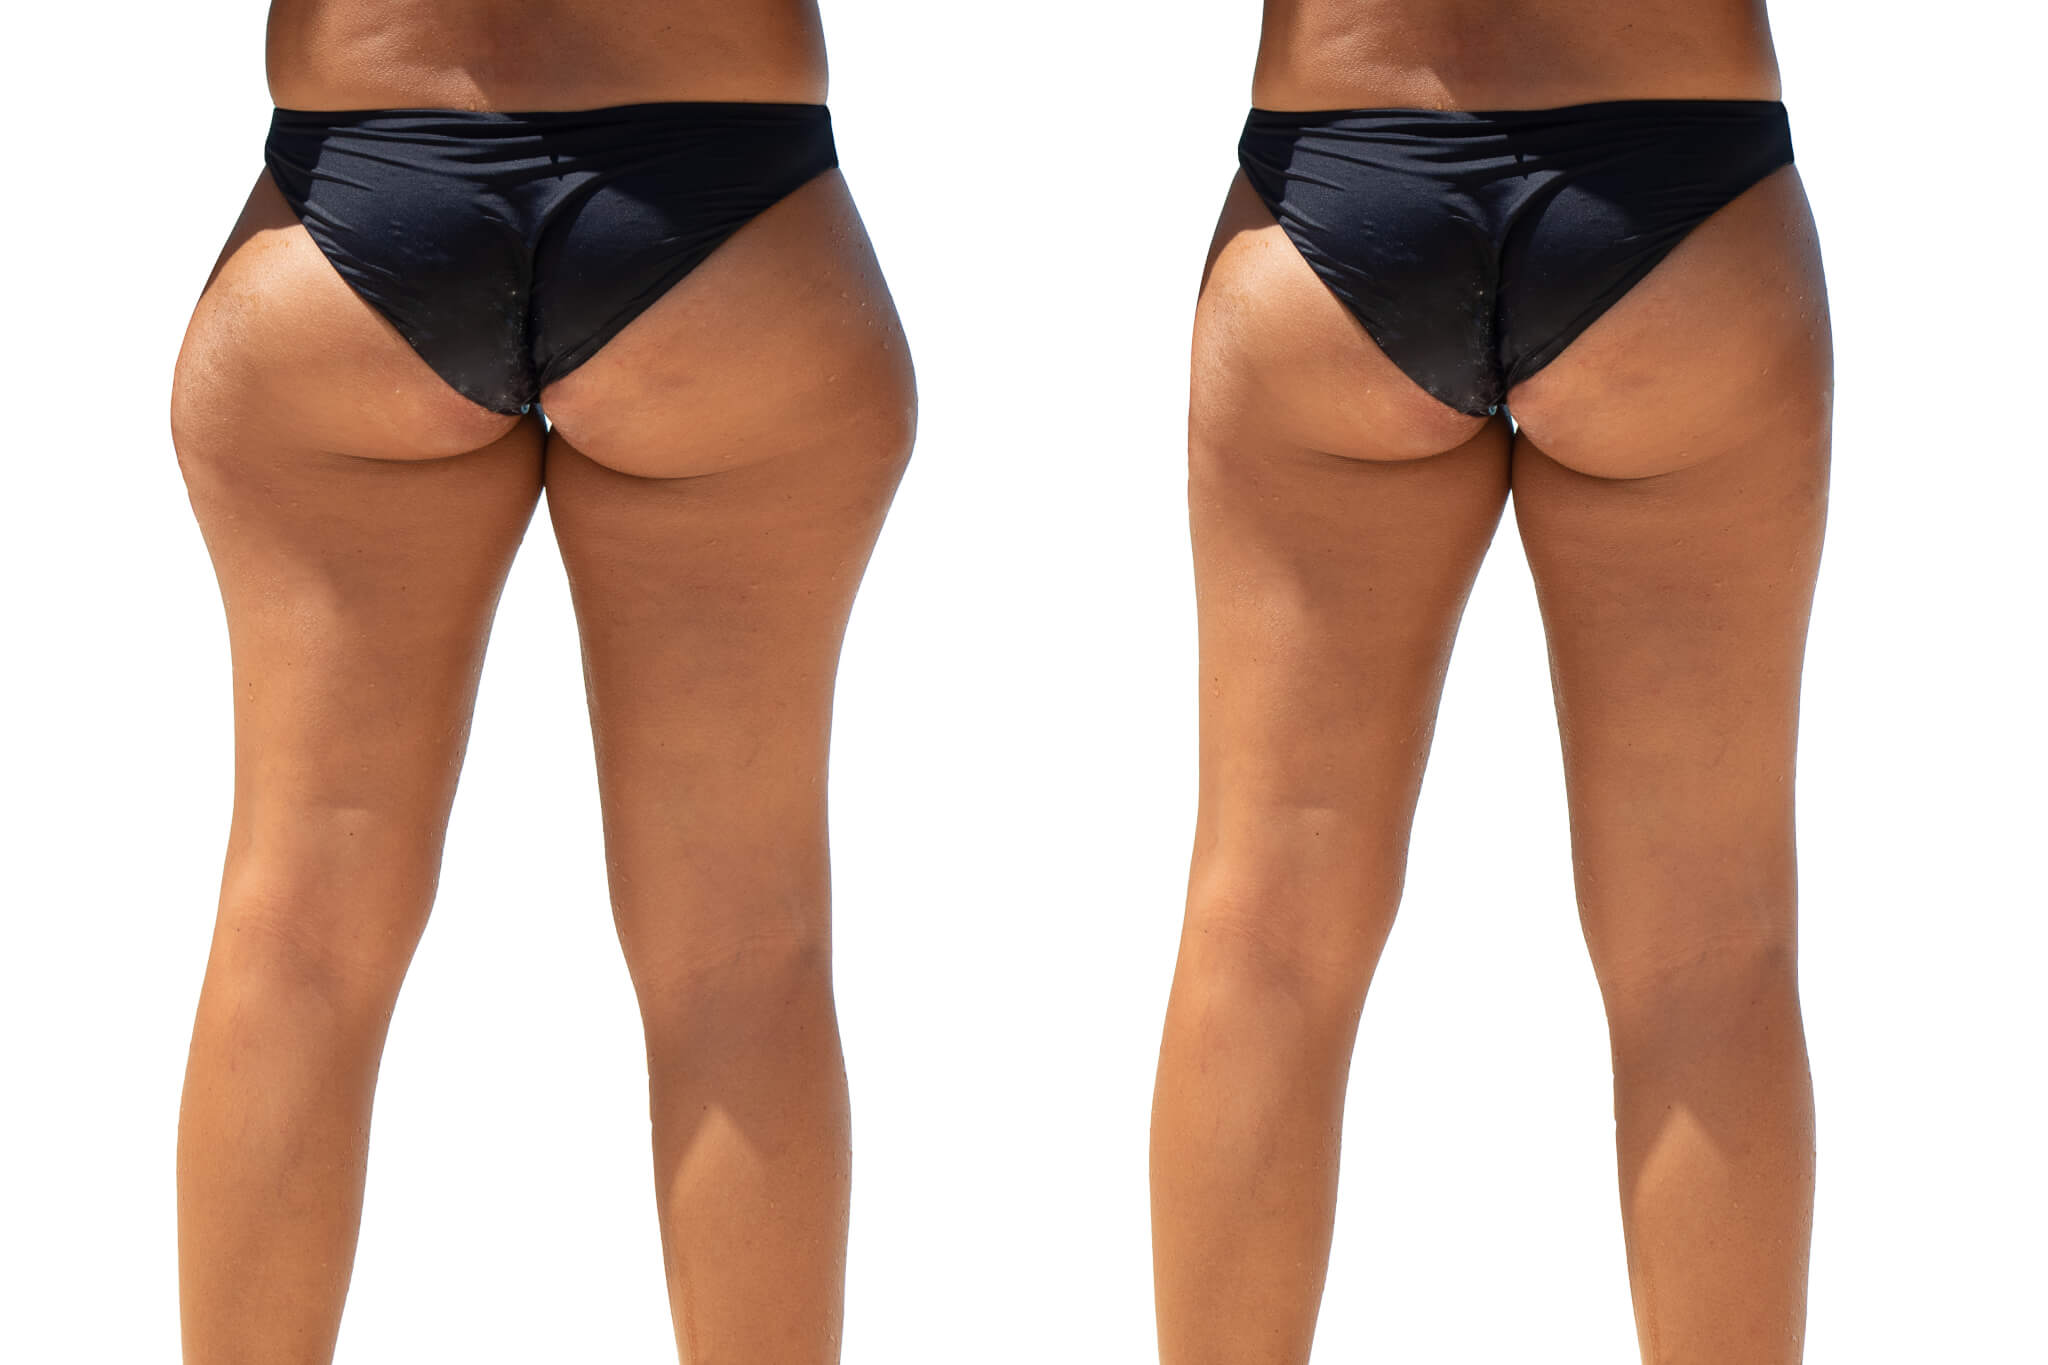 The Brazilian Butt Lift: Getting a Buttocks Augmentation Using Fat Grafting...